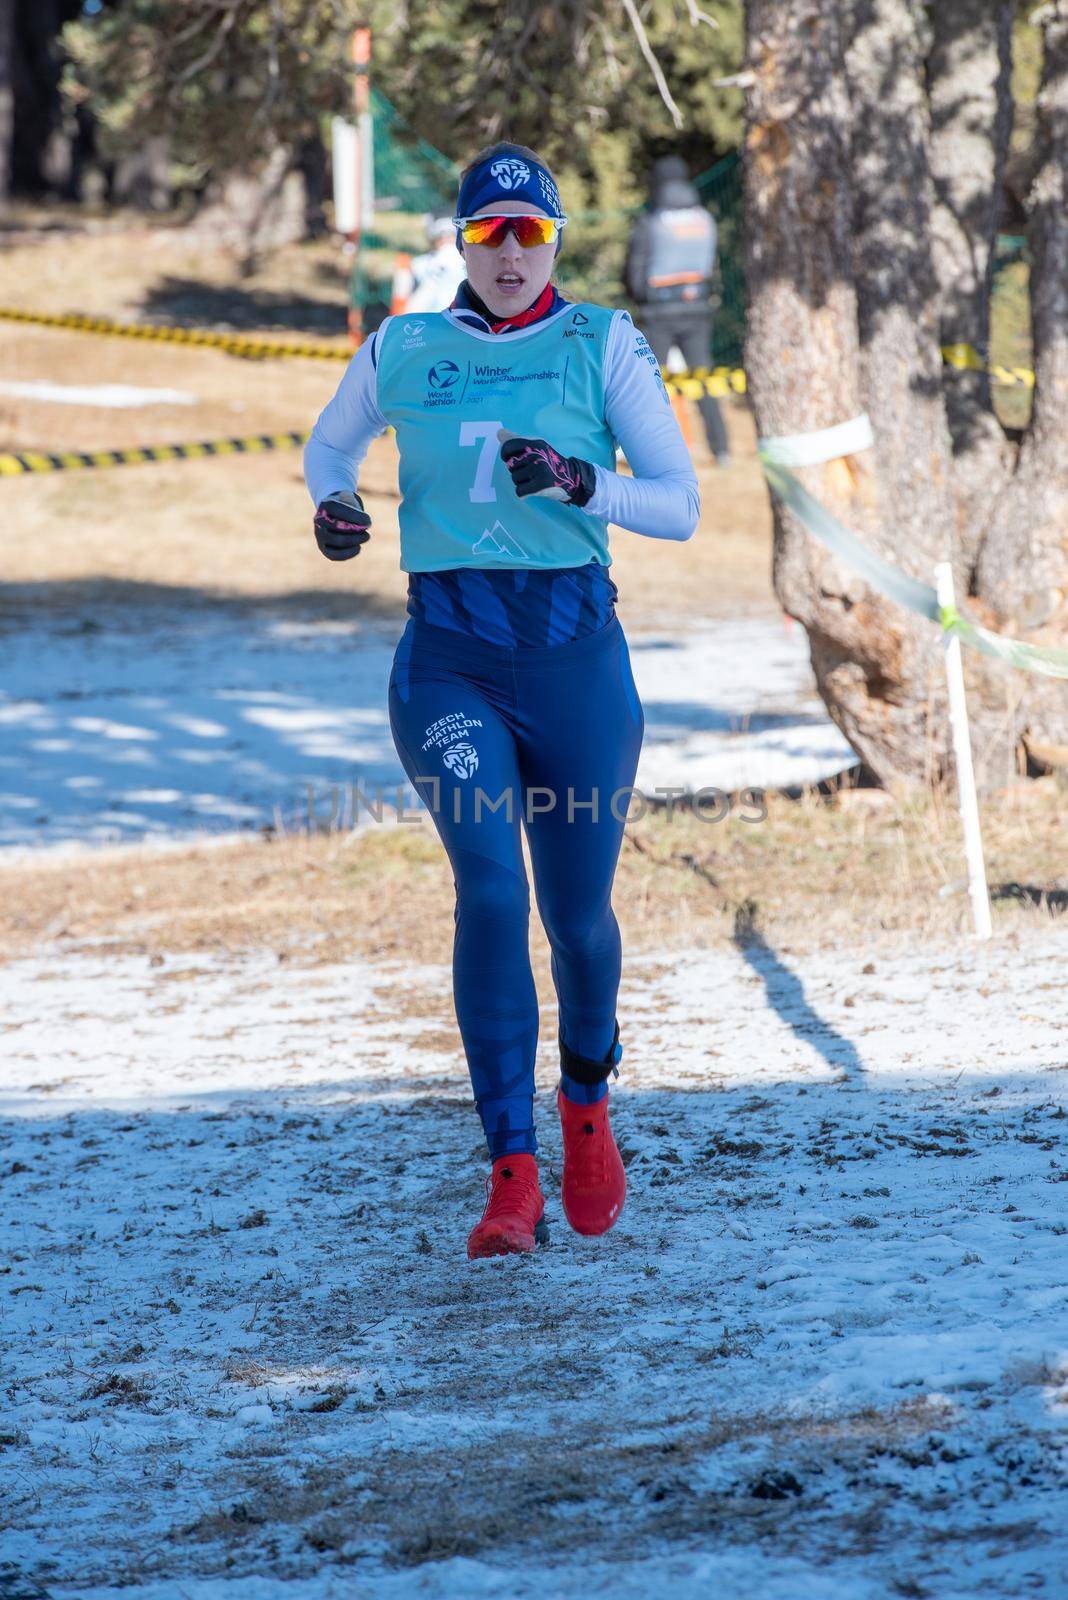 Aneta Grabmullerova CZE in the 2021 World Triathlon Winter Championships Andorra by martinscphoto